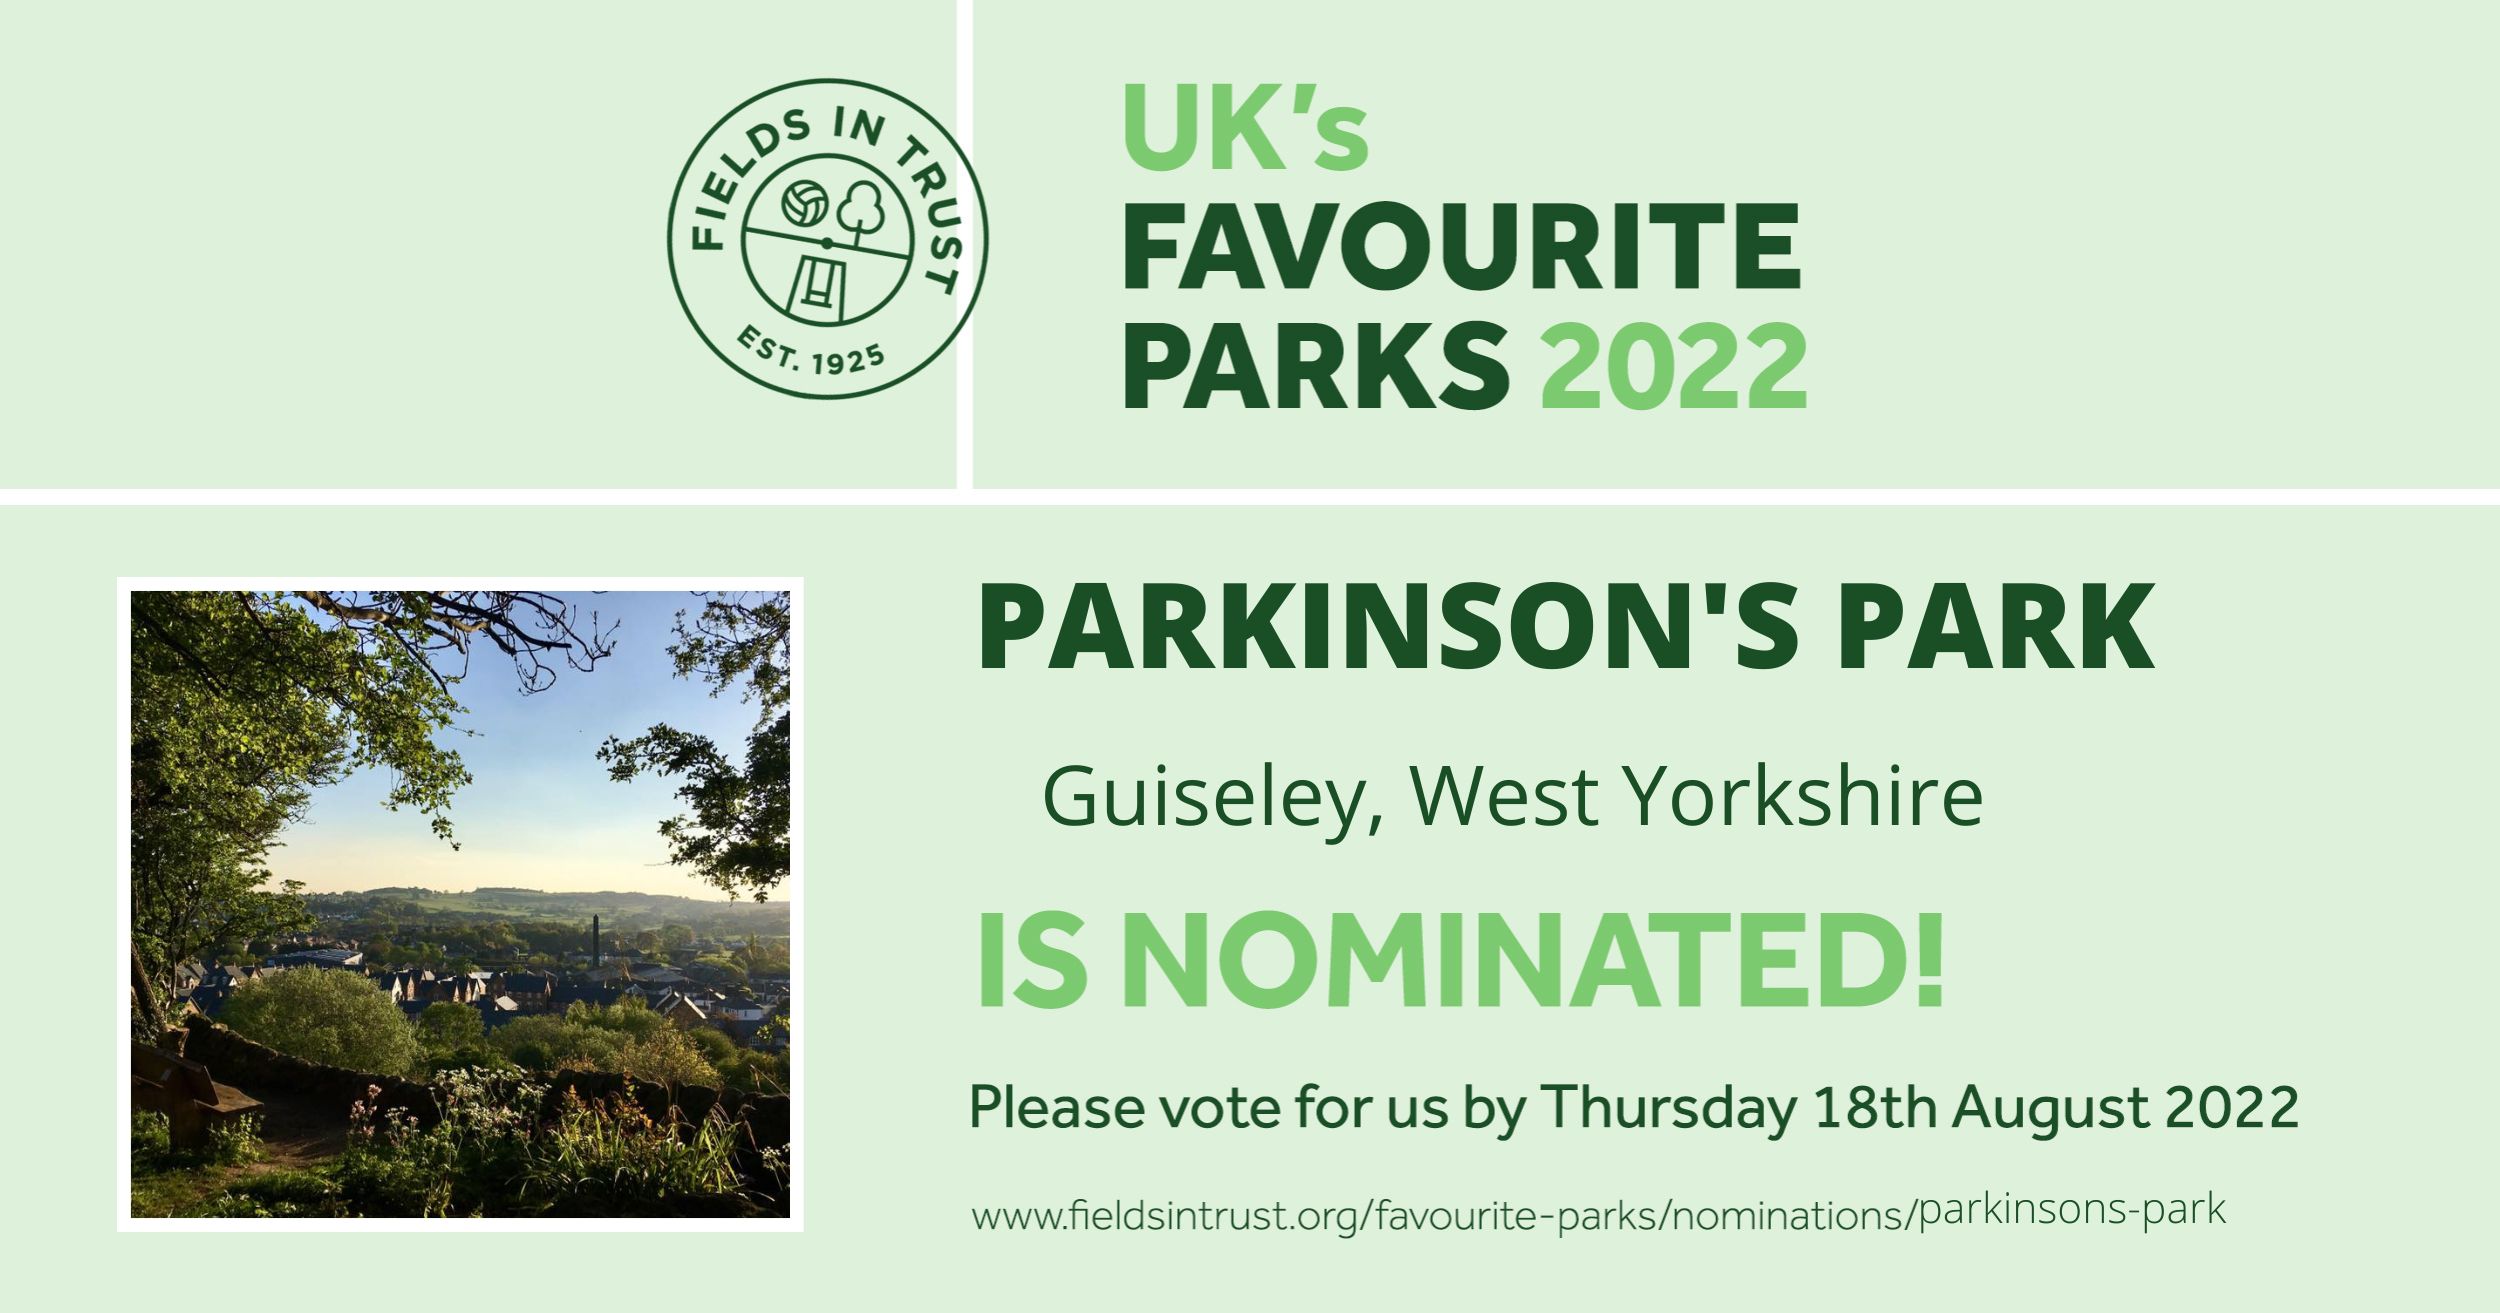 copy-of-uks-favourite-parks-2022